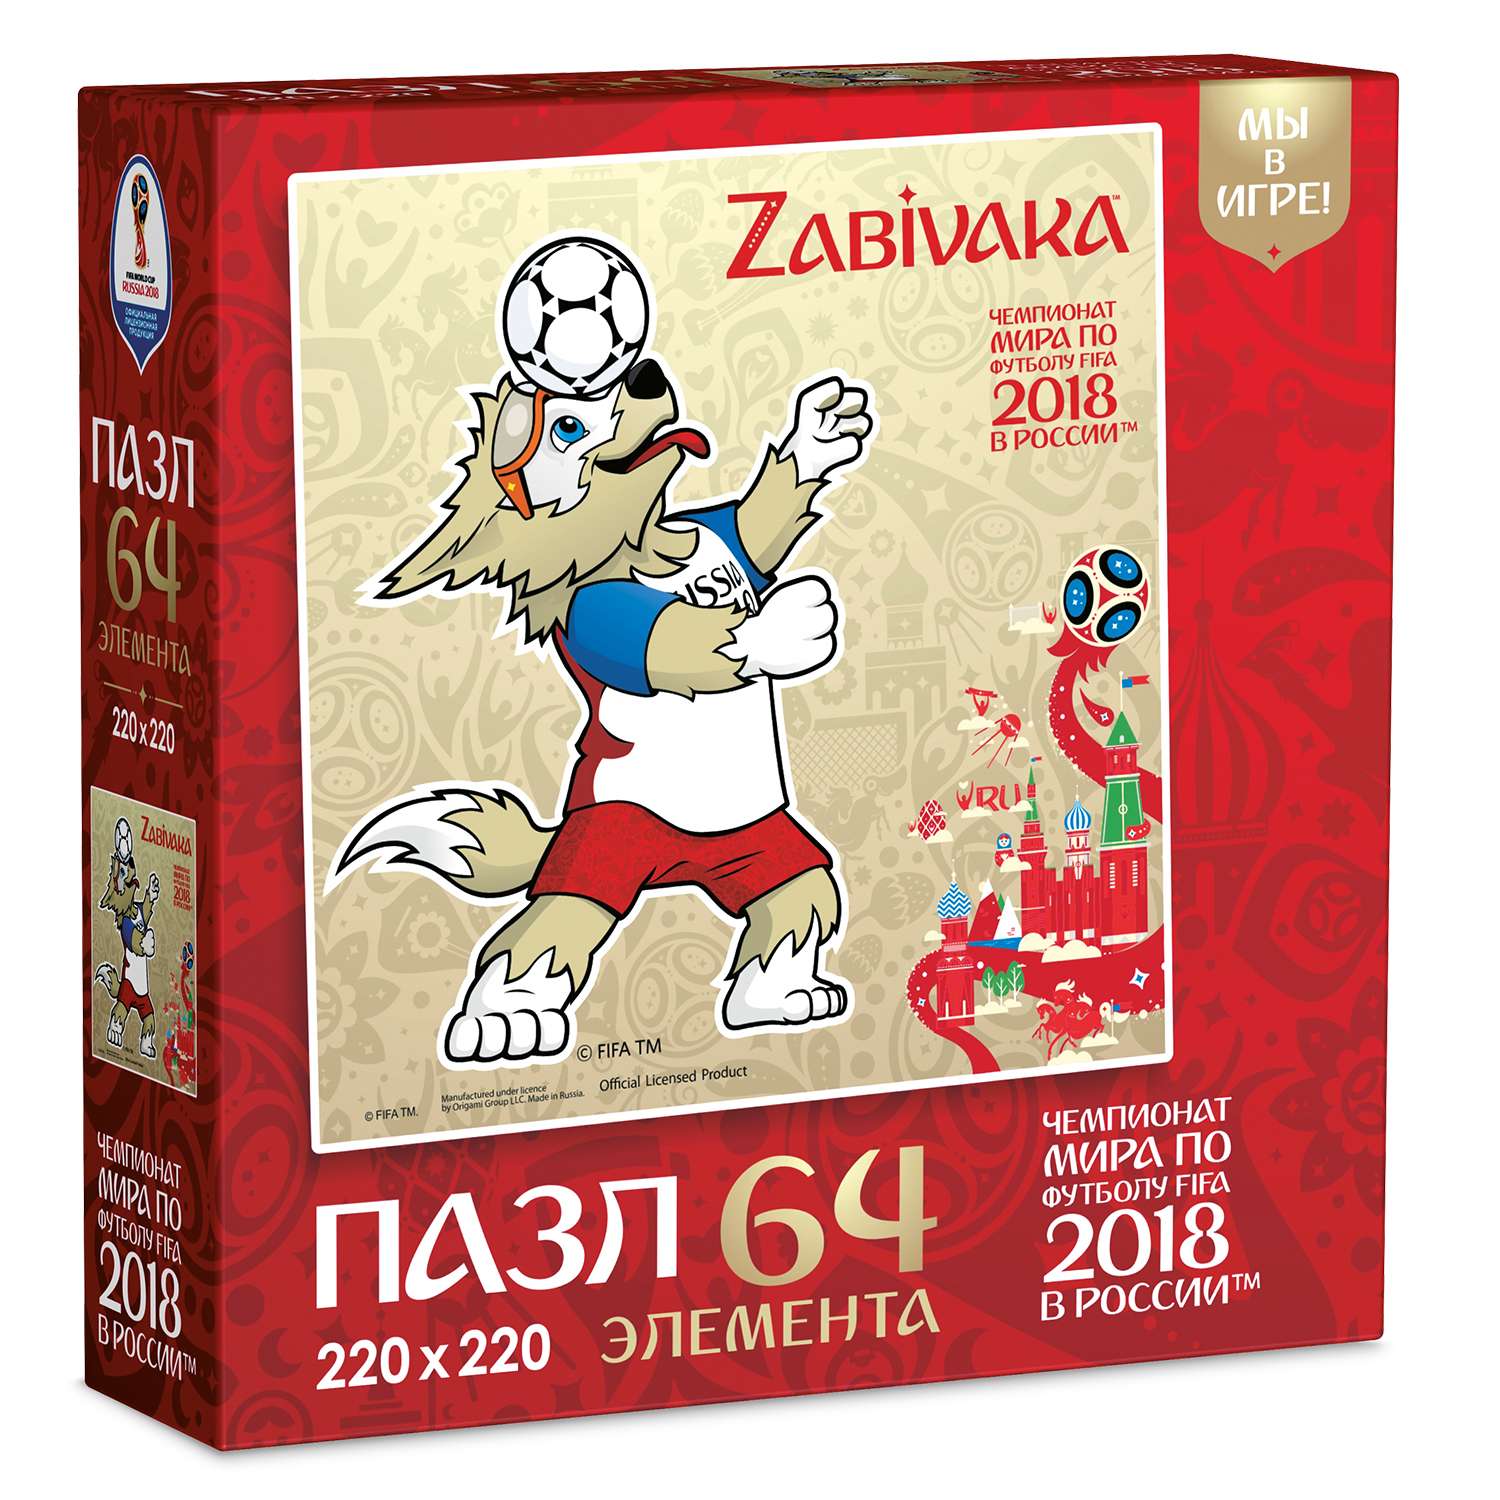 Пазл 2018 FIFA World Cup Russia TM Забивака (03793) 64 элемента в ассортименте - фото 5